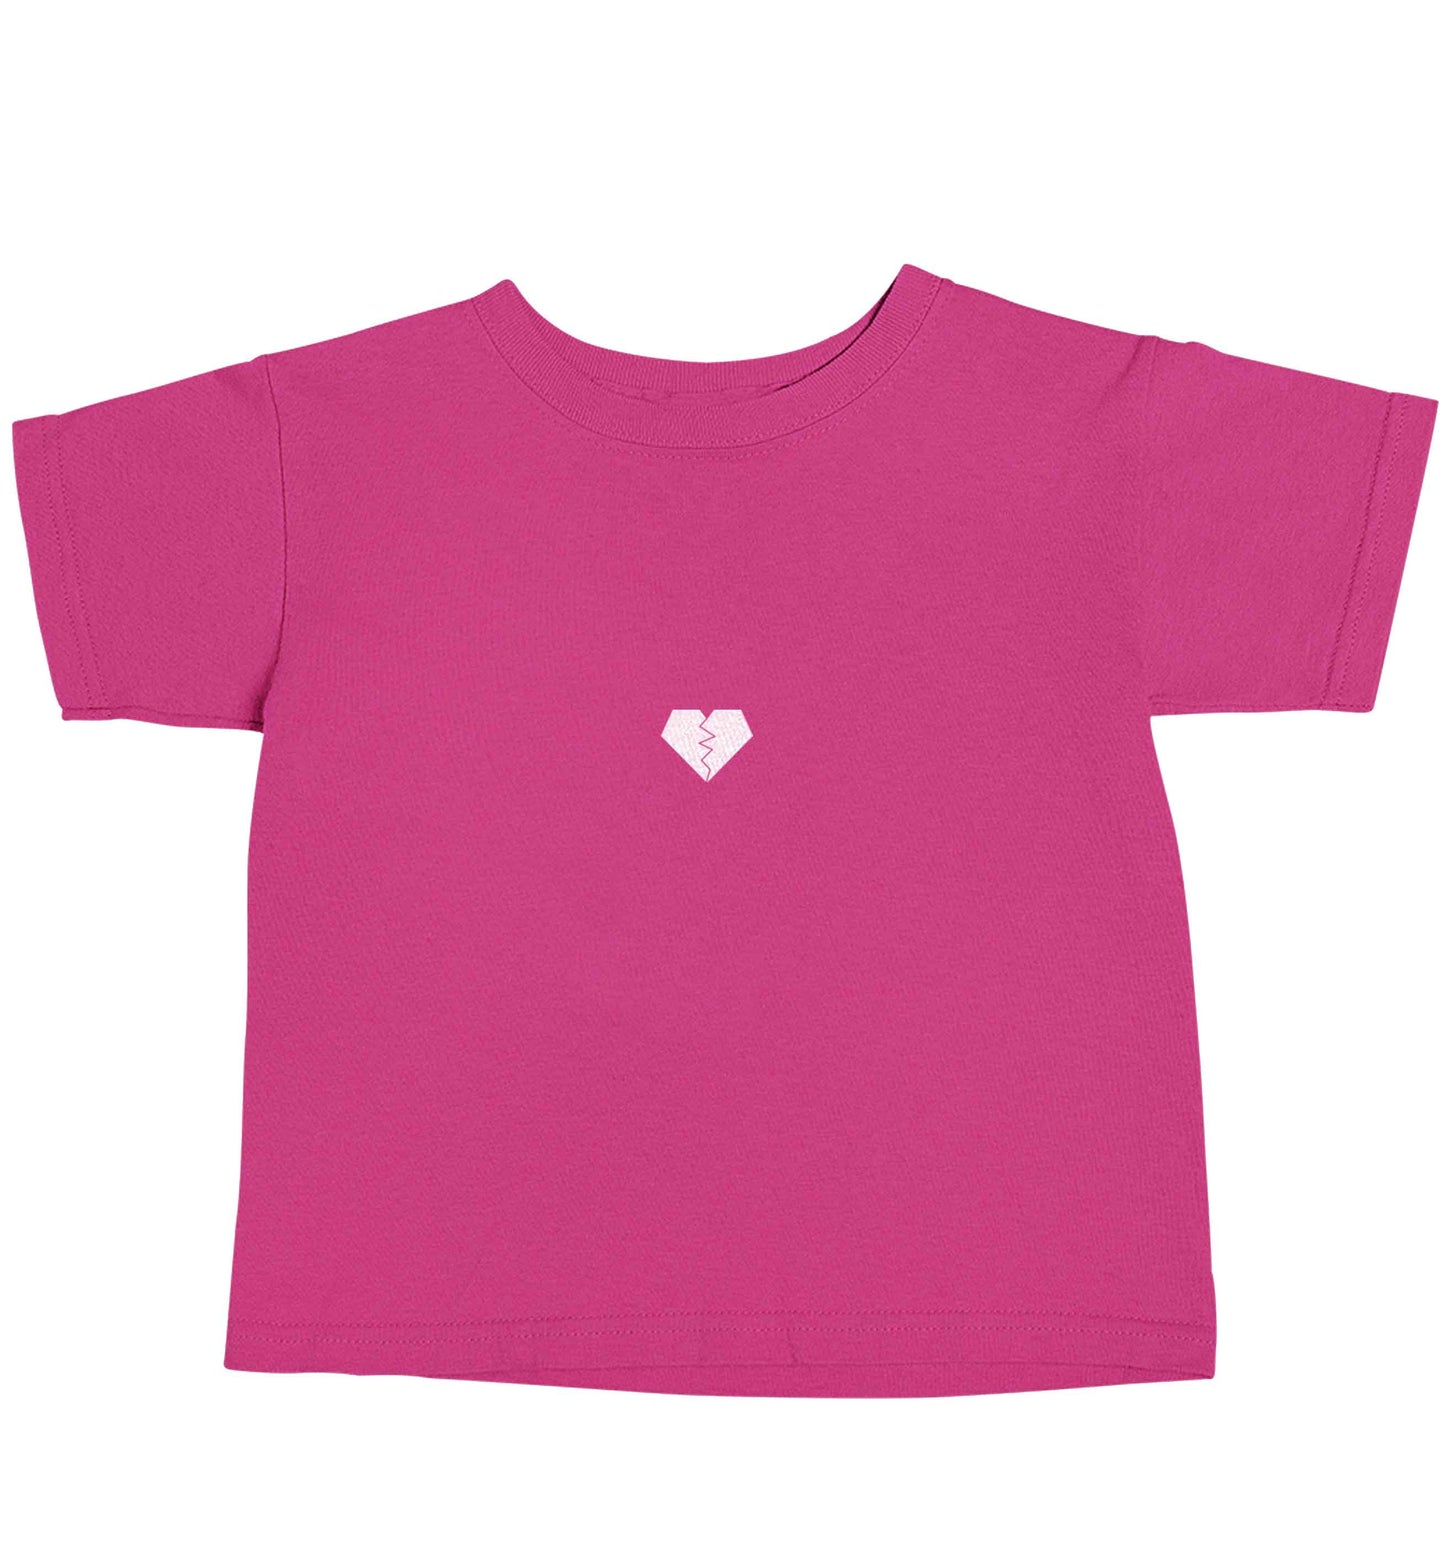 Tiny broken heart pink baby toddler Tshirt 2 Years